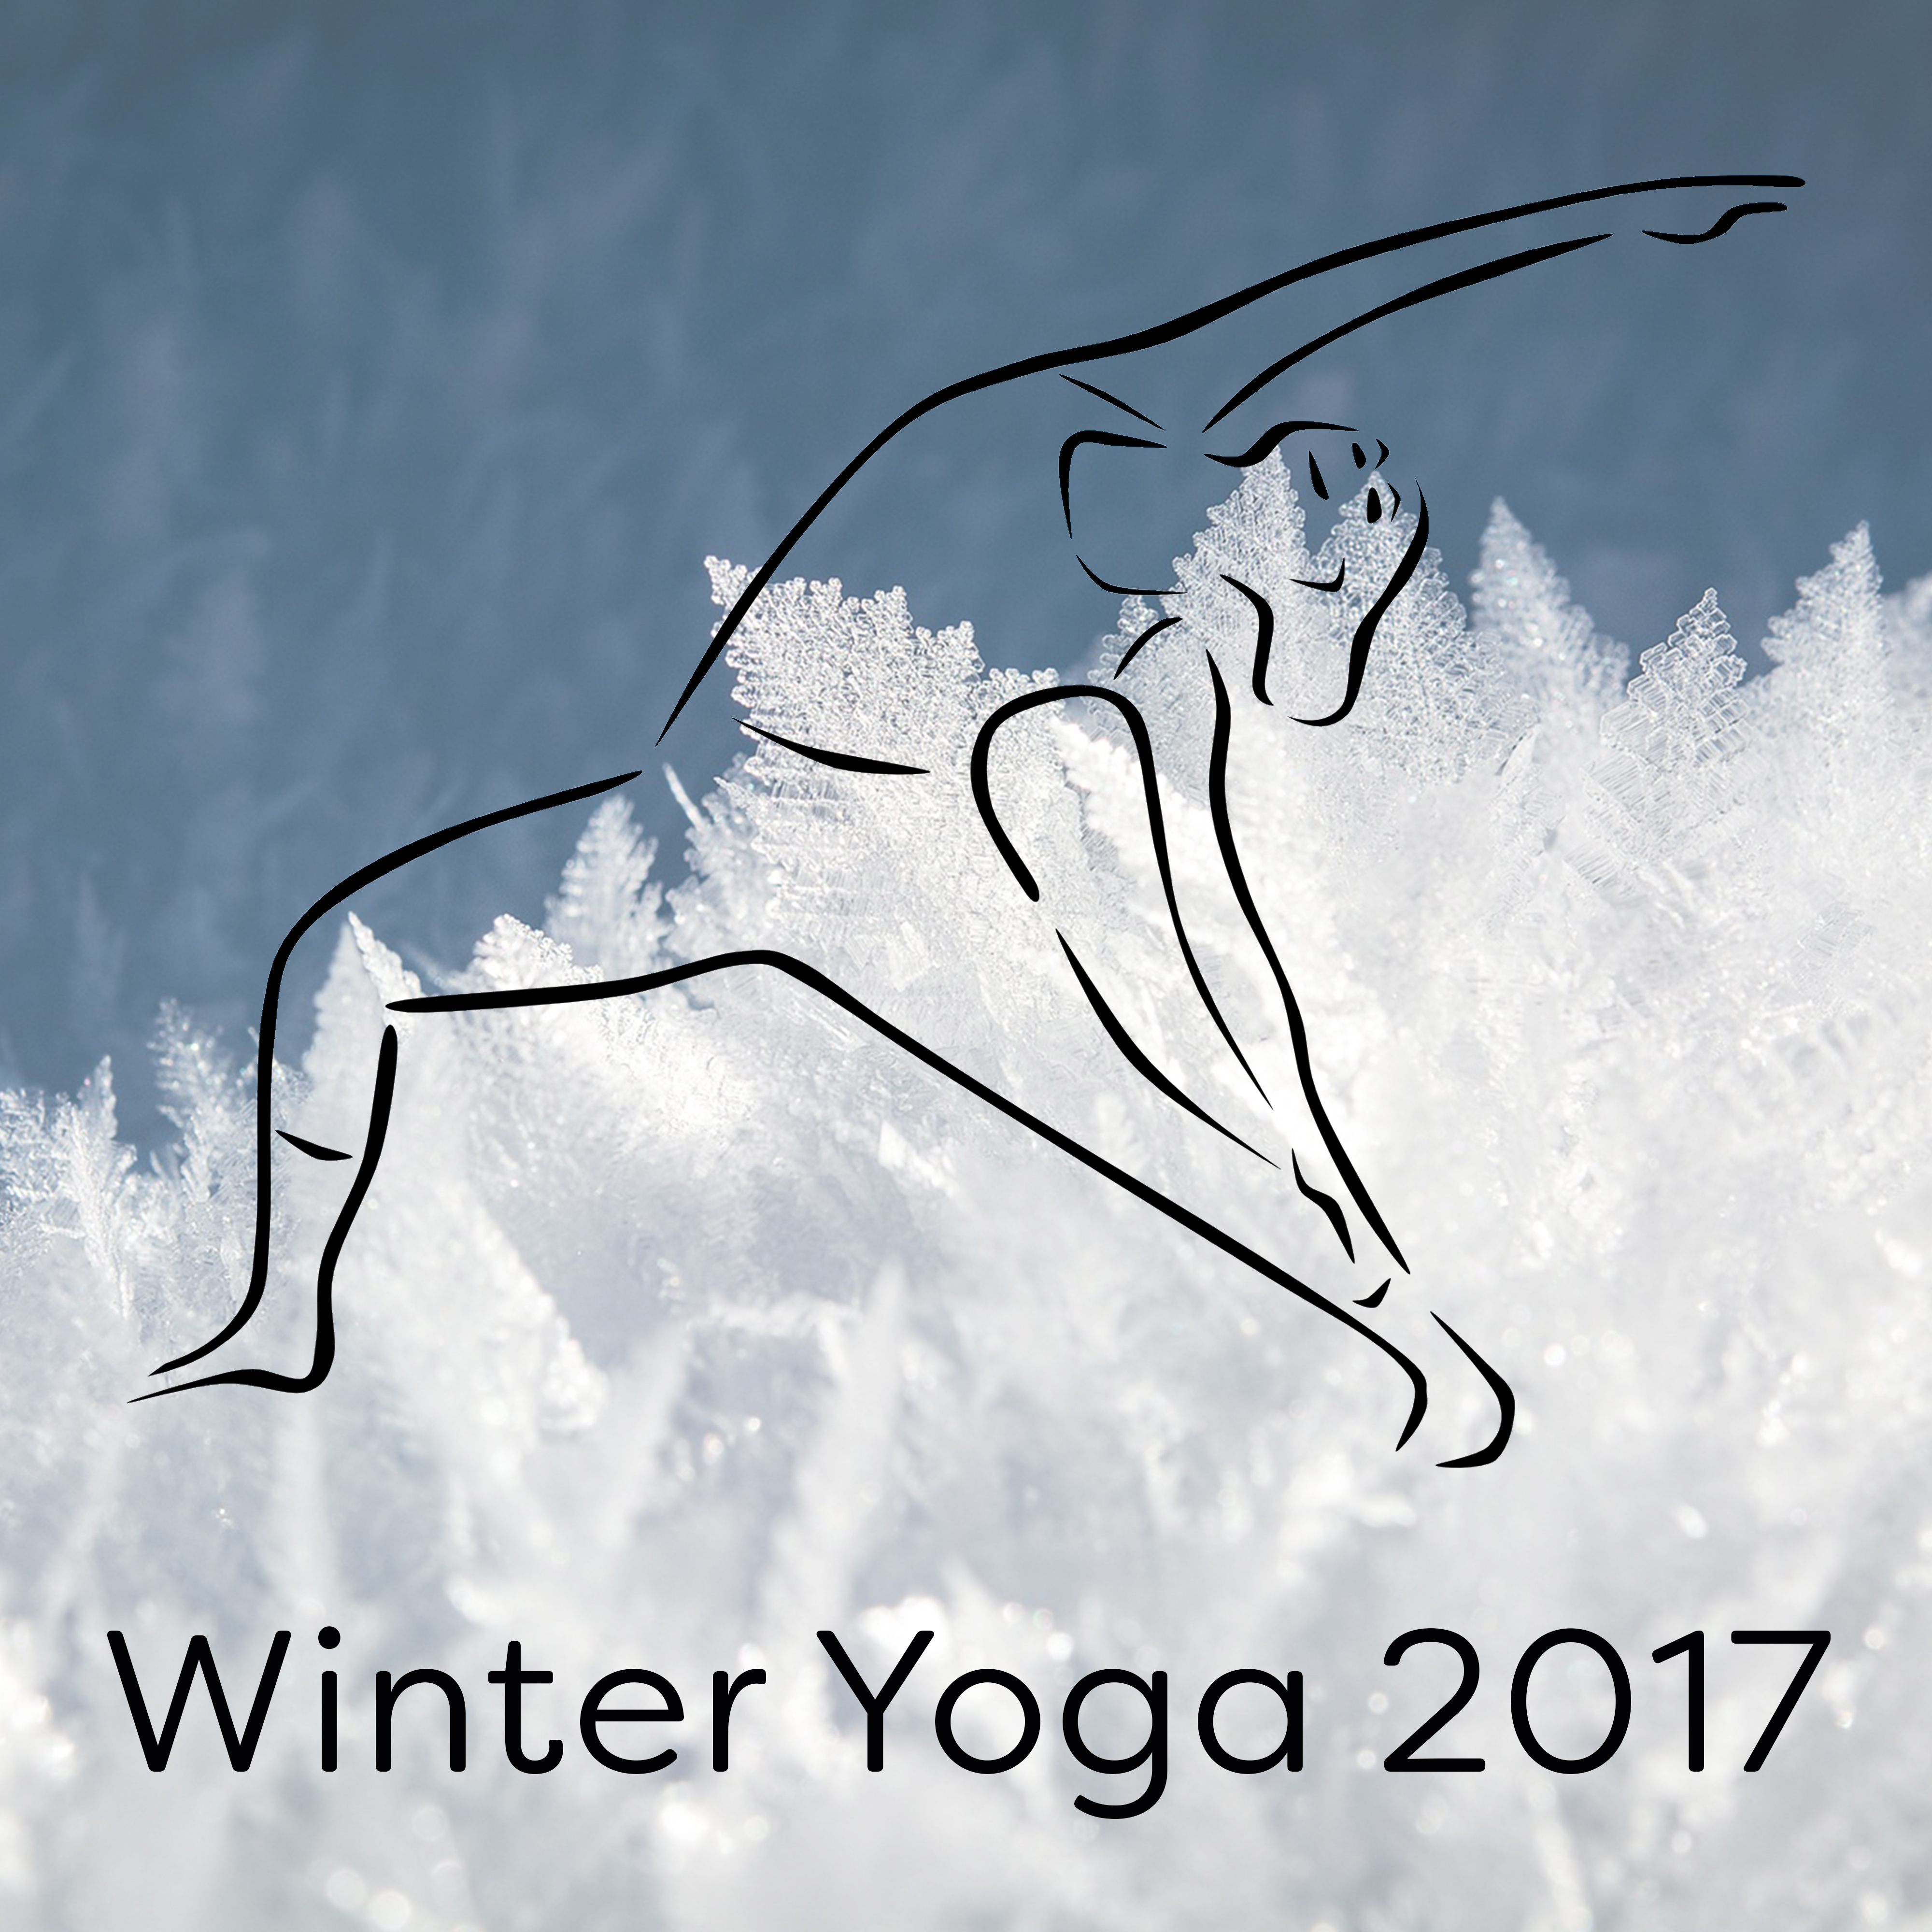 Winter Yoga 2017